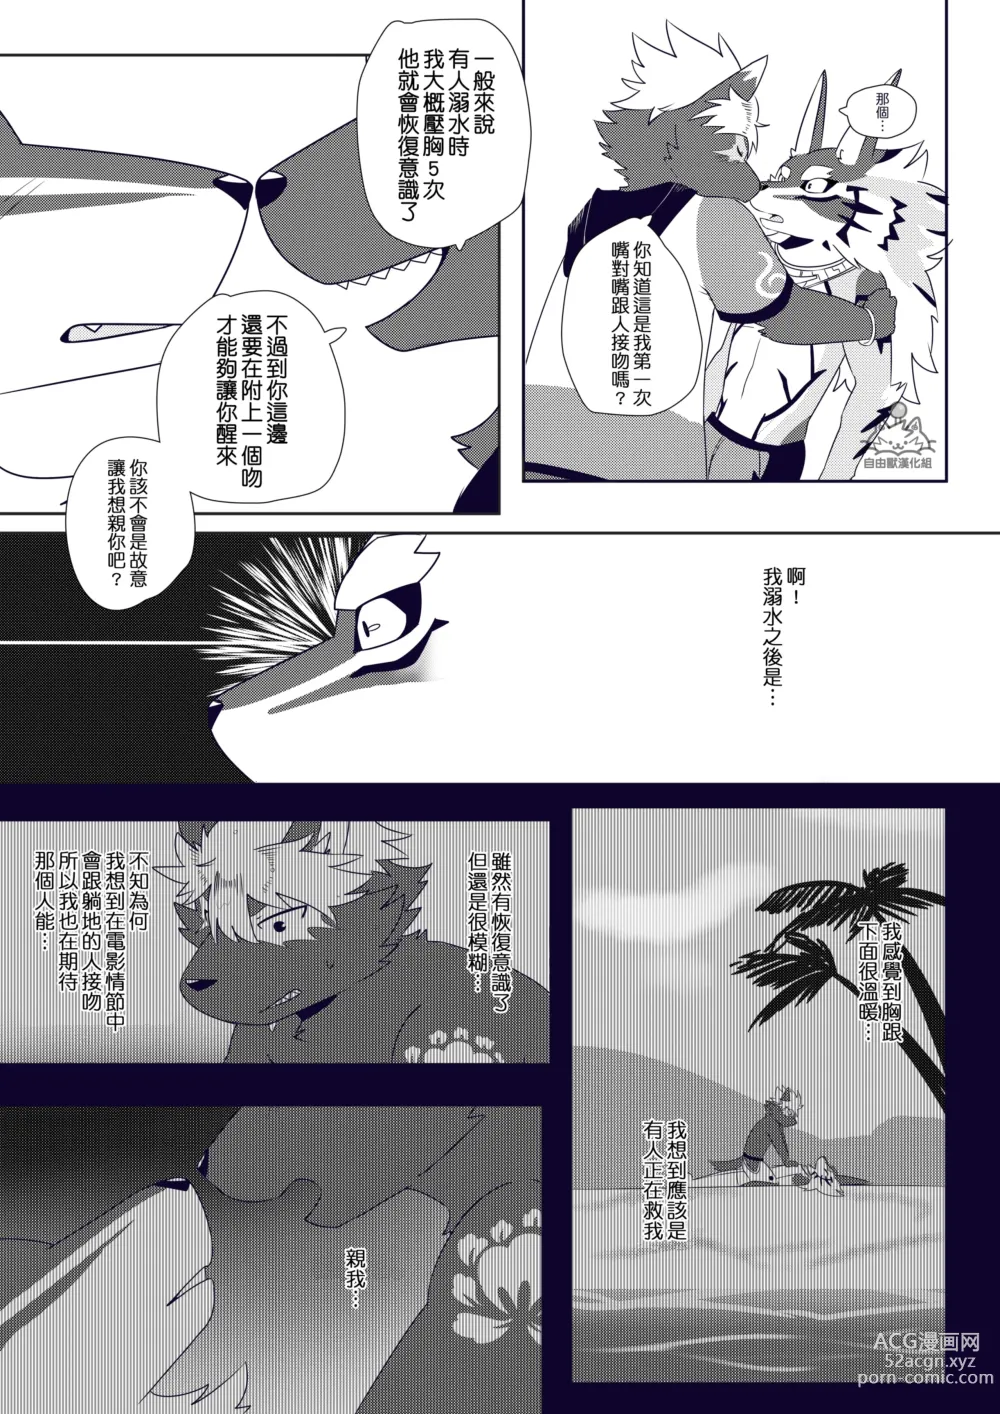 Page 16 of doujinshi BREAKTIME!